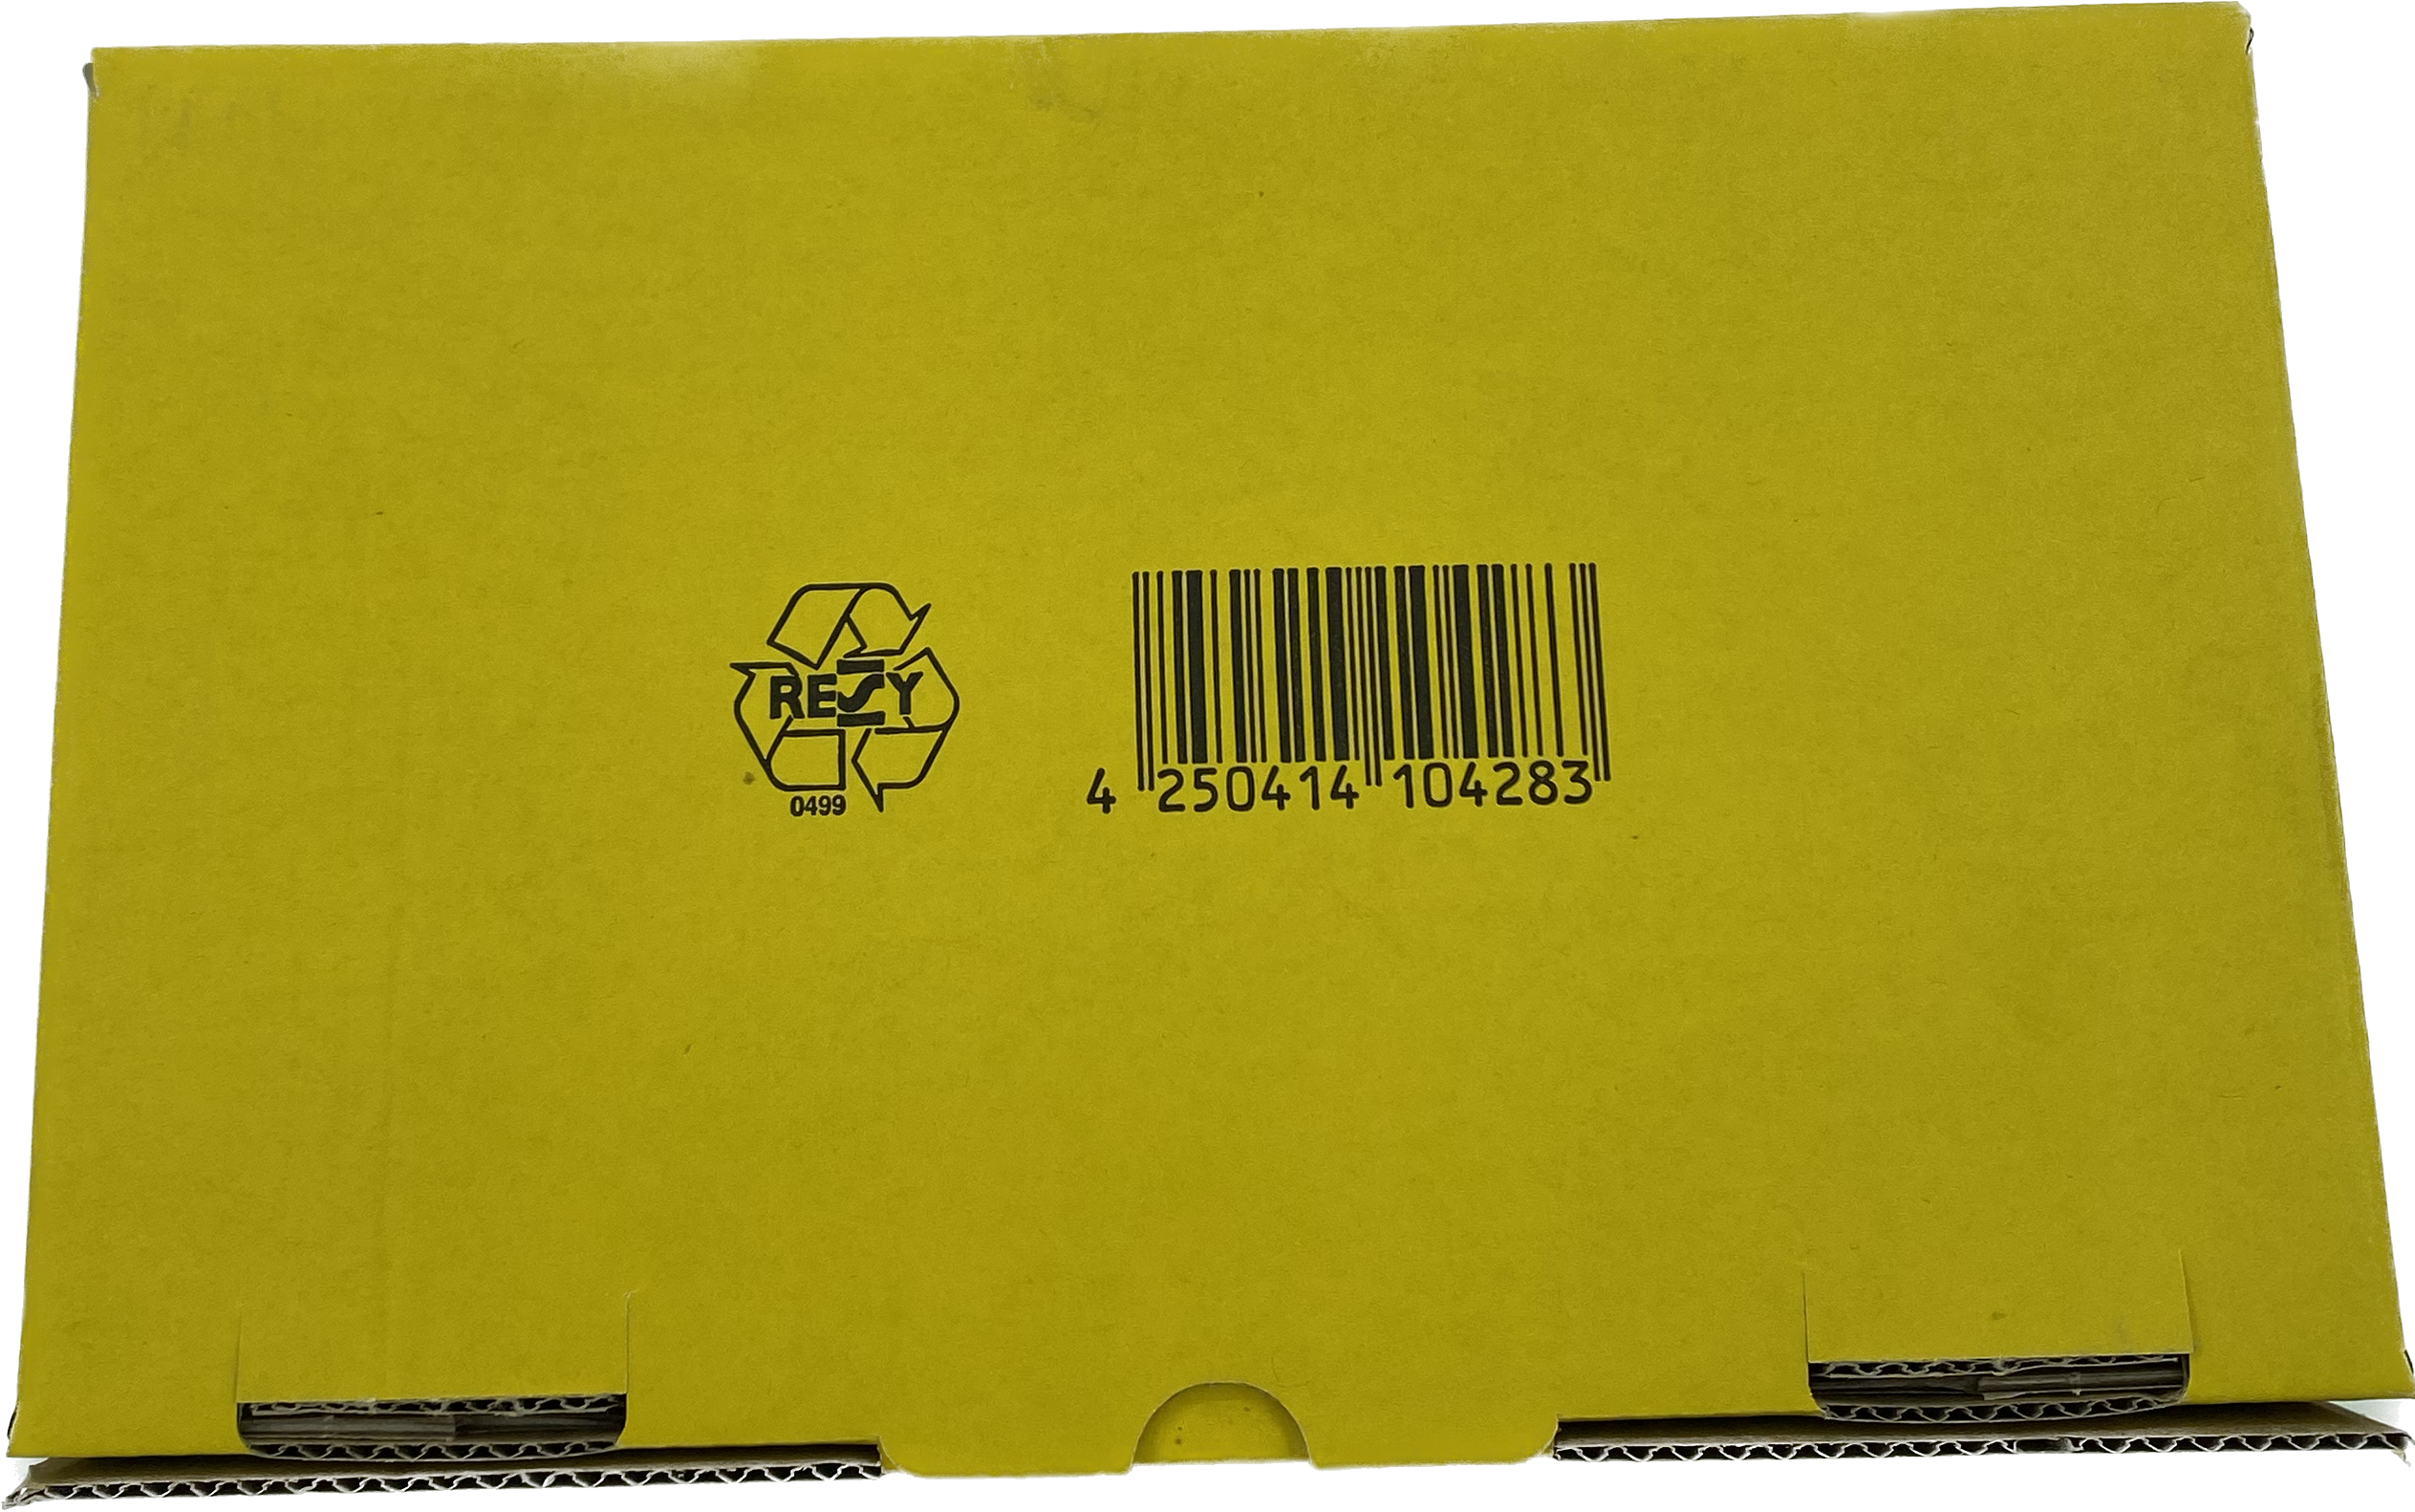 Mailbox-Karton XS, 230x160x20mm, gelb, DIN A5